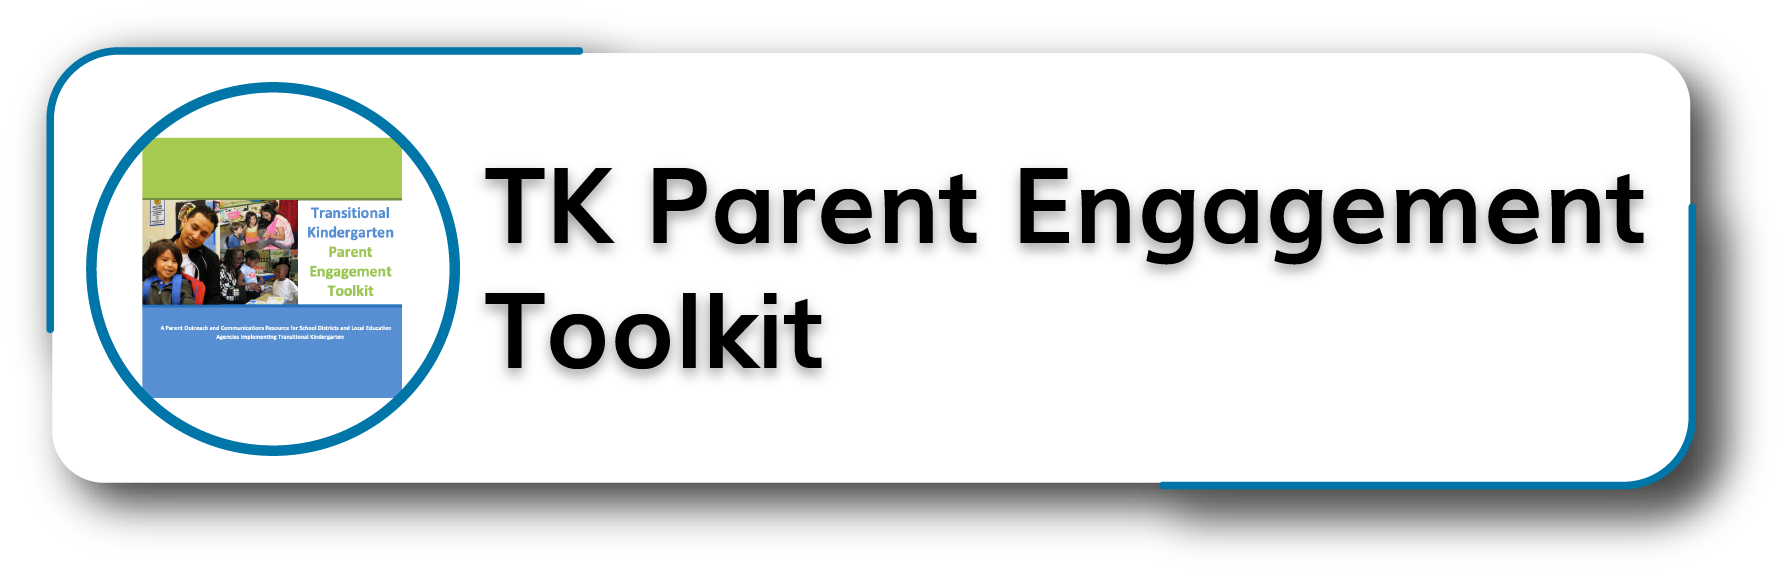 TK Parent Engagement Toolkit Button